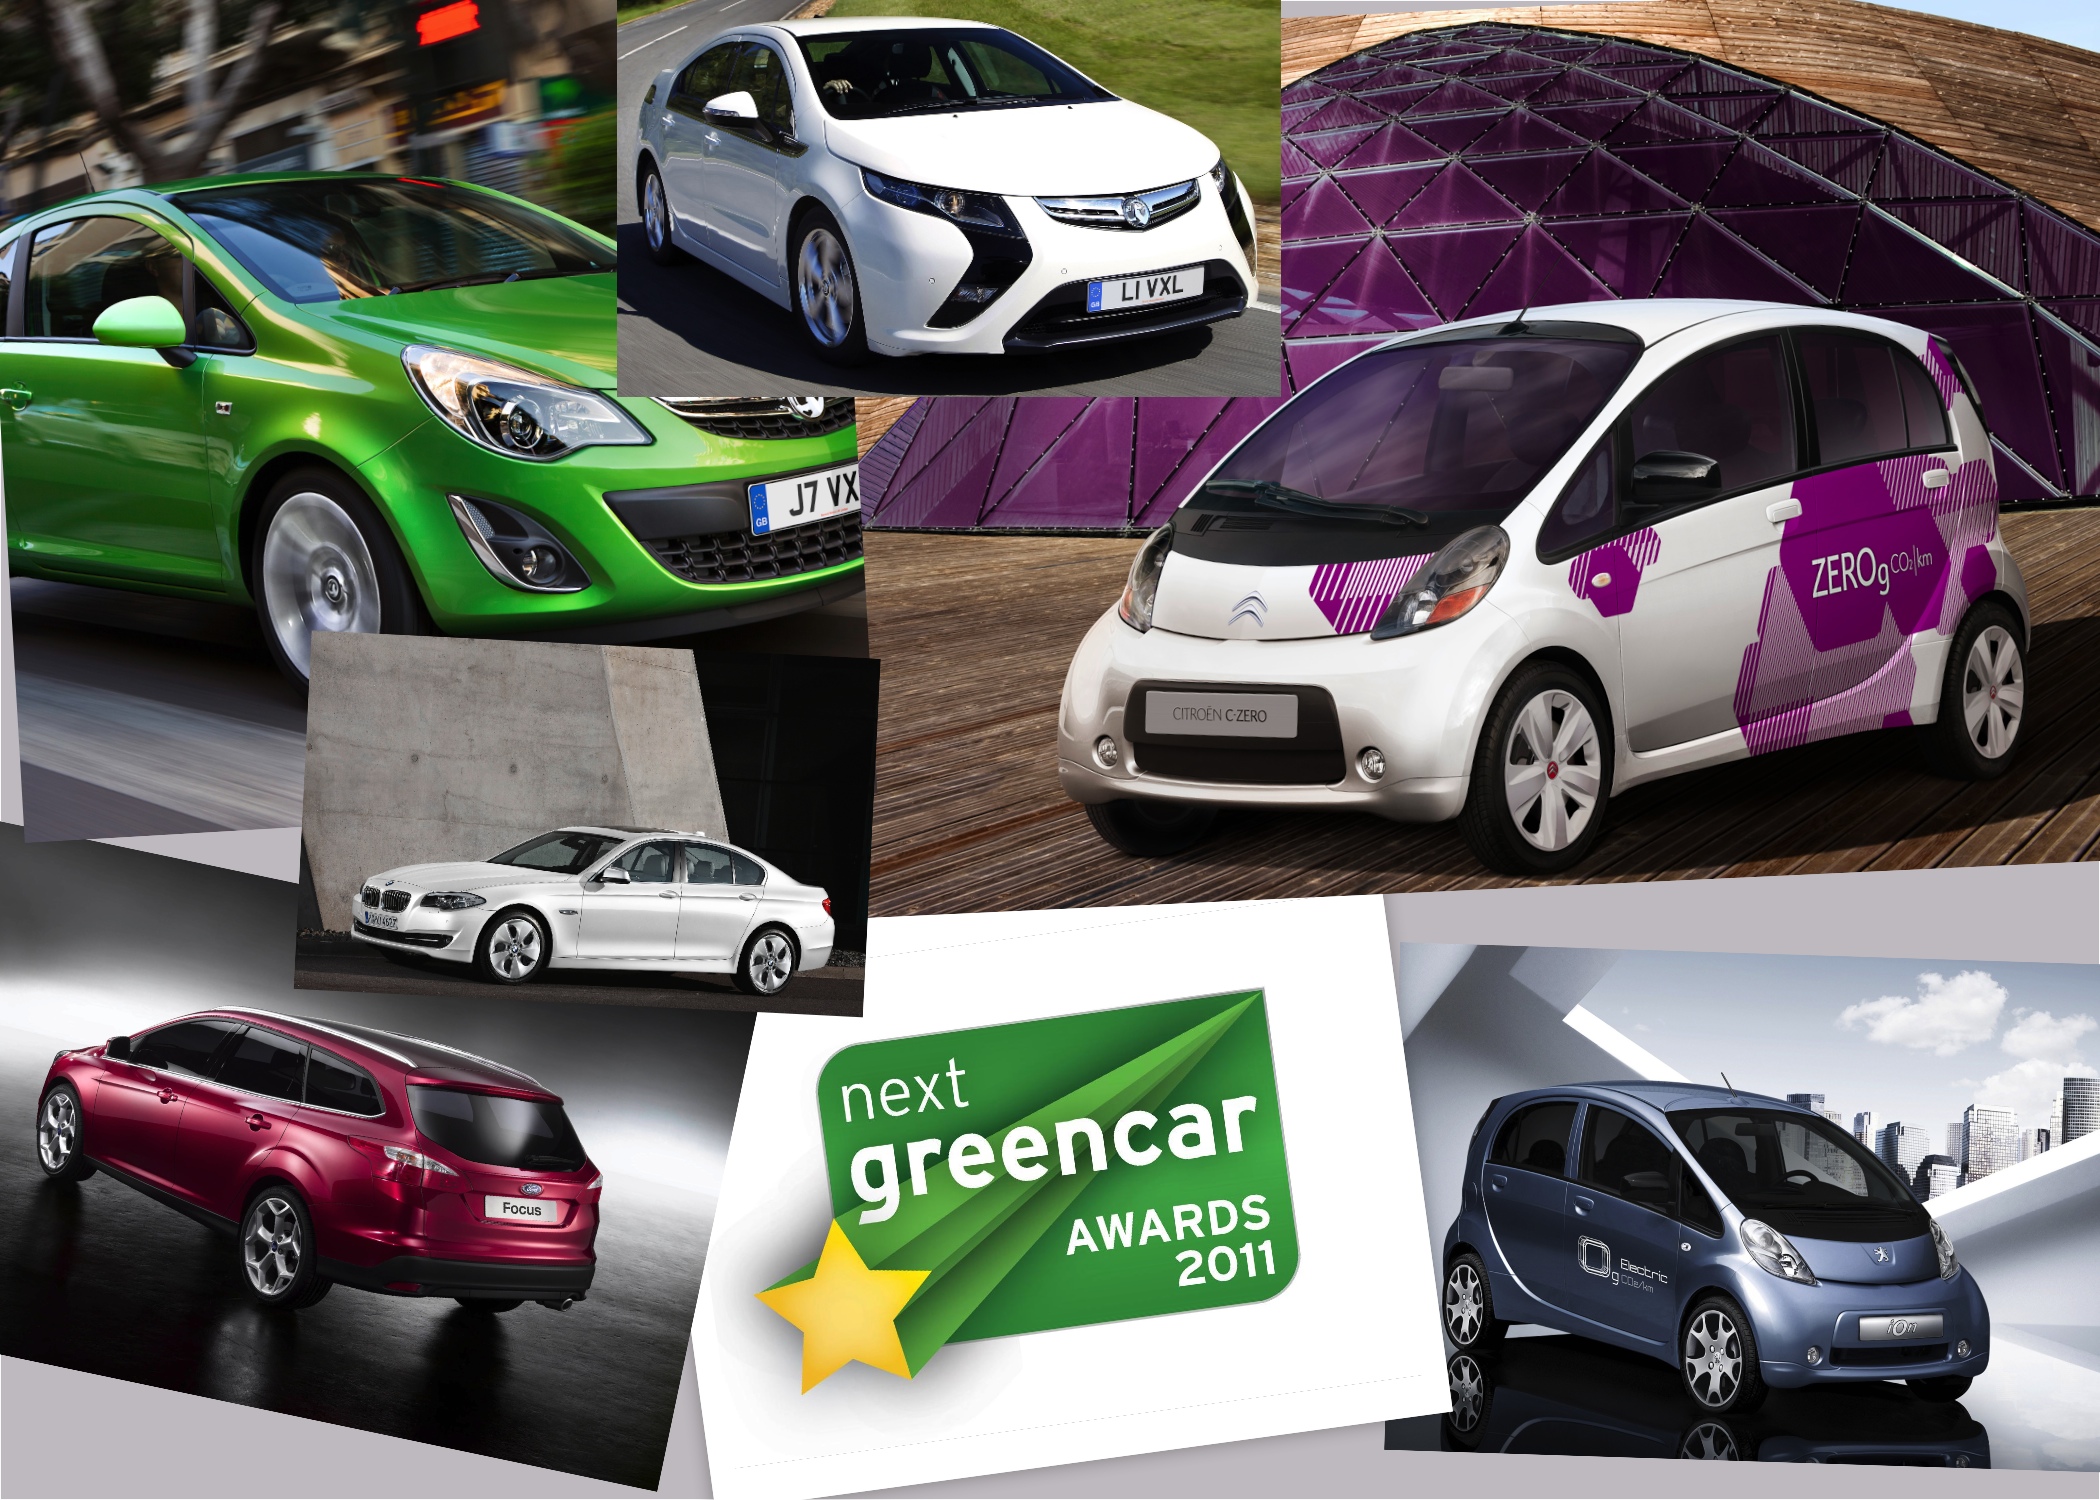 Next Green Car Awards 2011 award winners